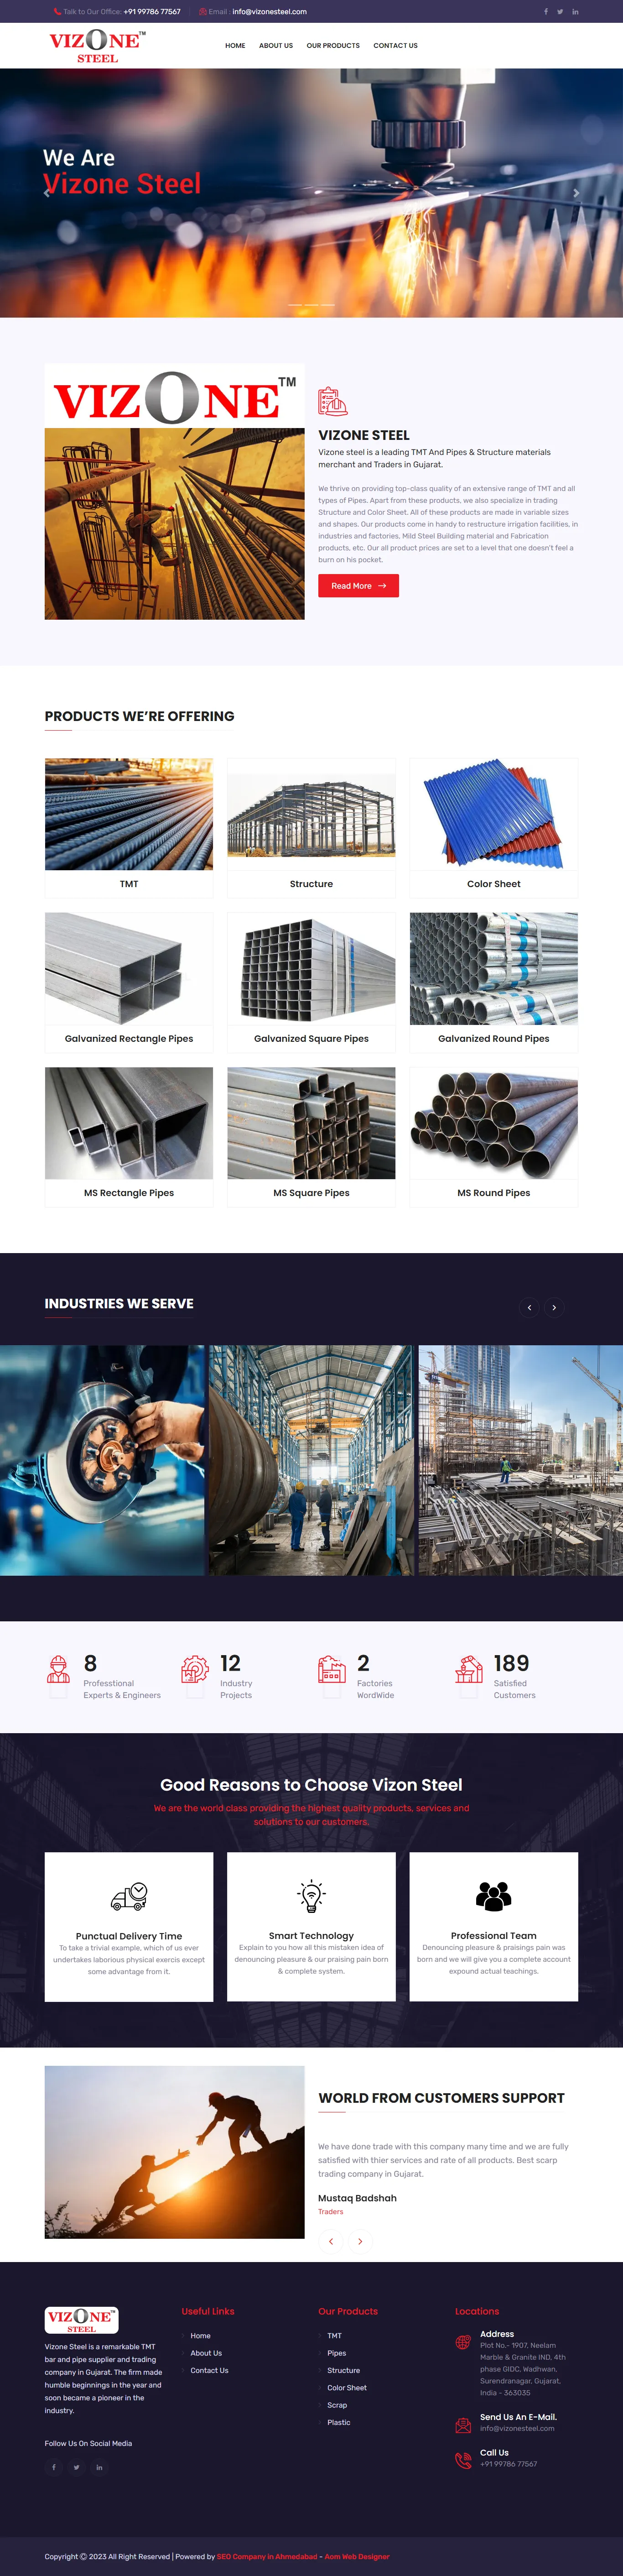 Vizone Steel Website